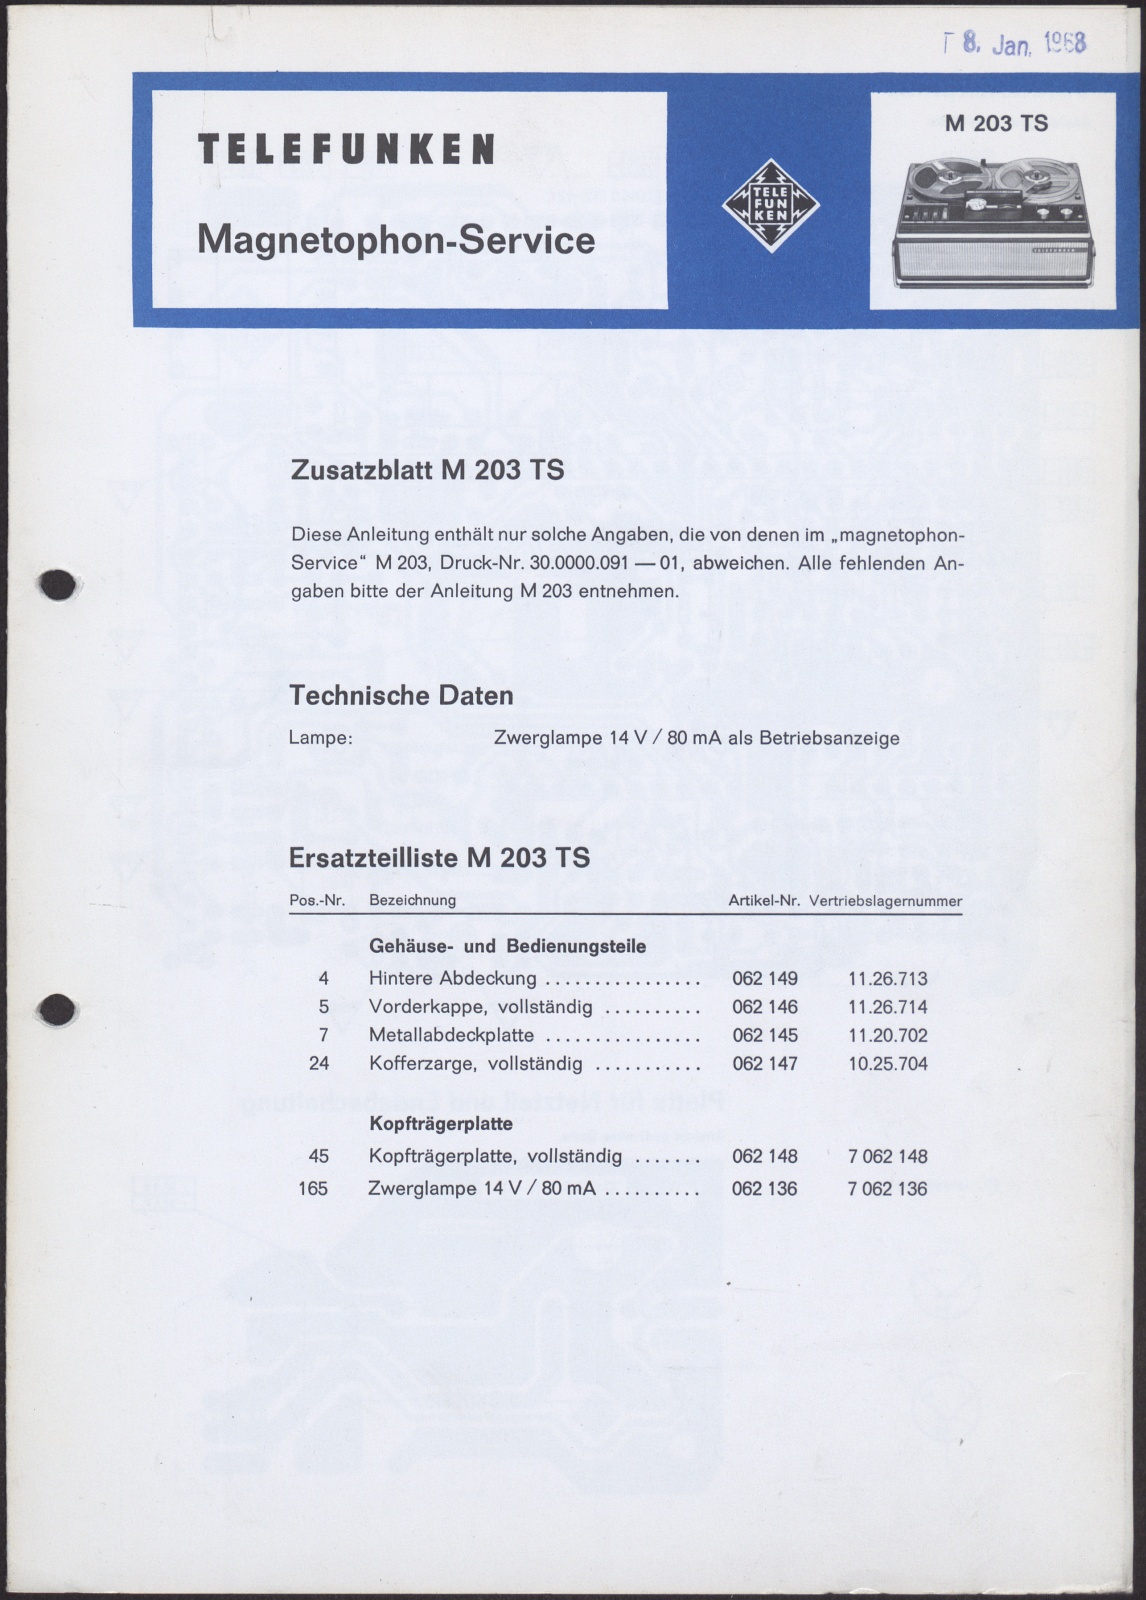 Bedienungsanleitung: Telefunken Magnetophon-Service M 203 TS; Zusatzblatt M 203 TS (Stiftung Deutsches Technikmuseum Berlin CC0)